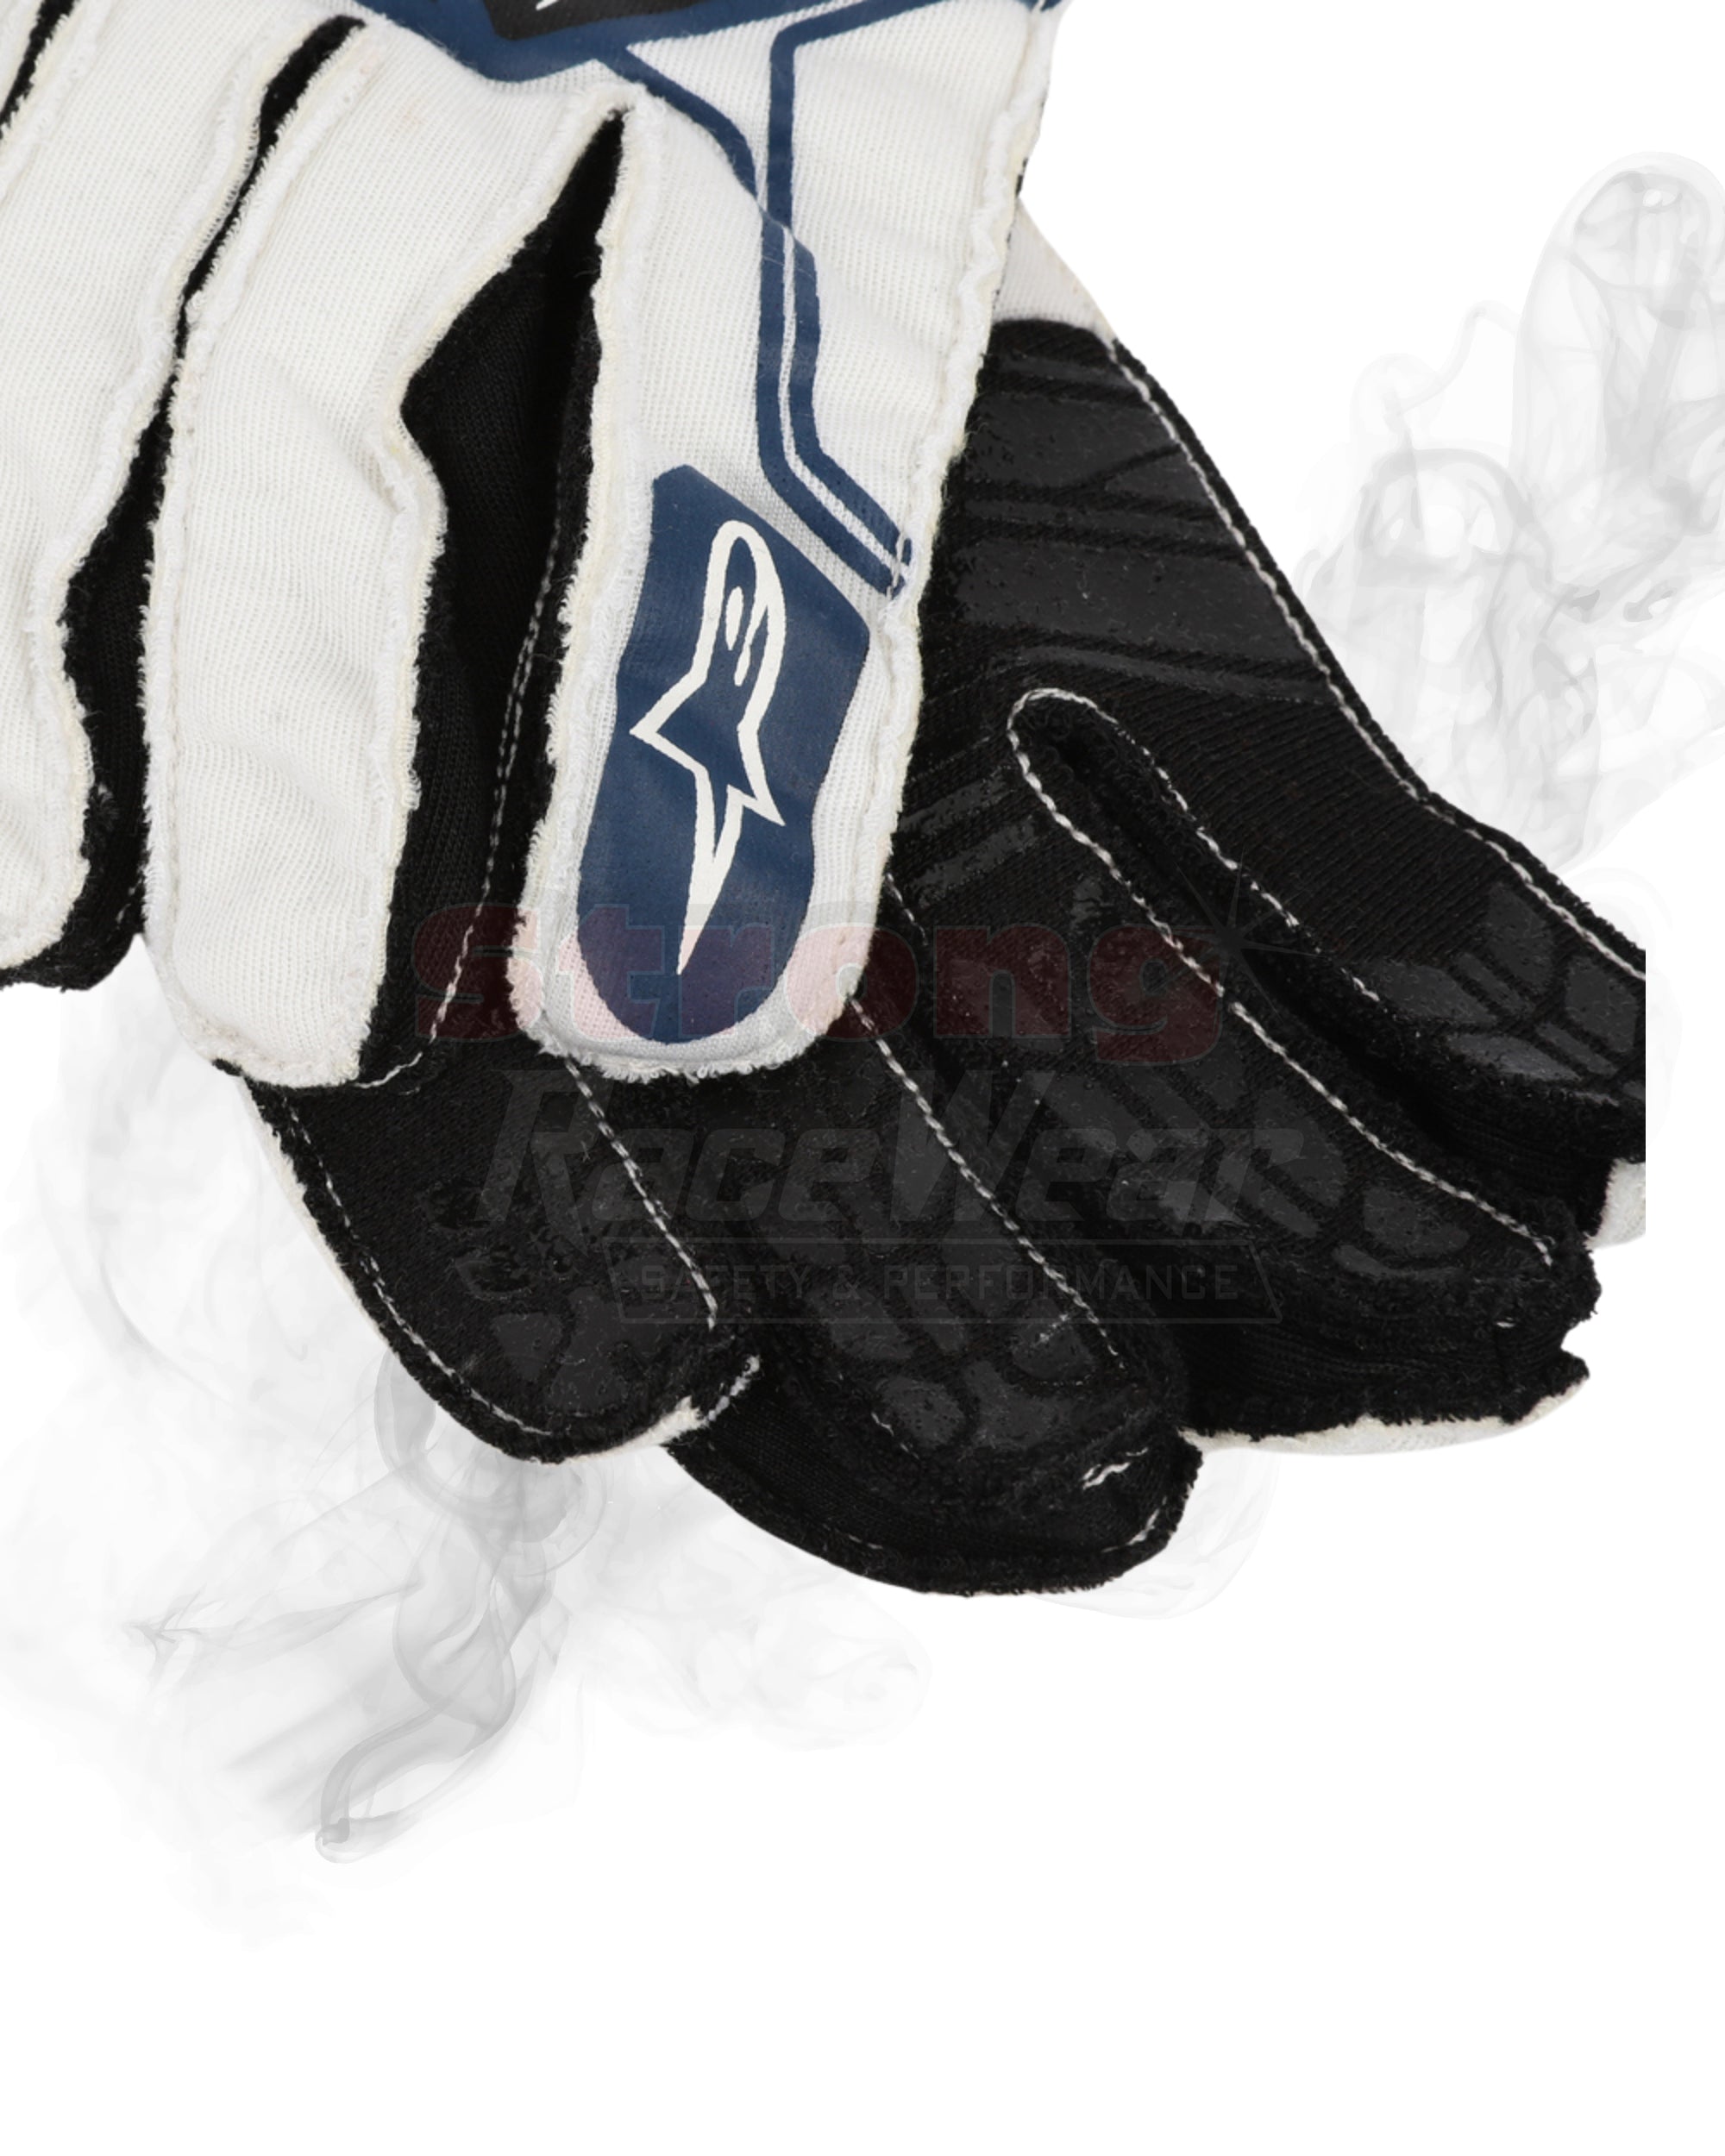 2018 Lance Stroll Spec F1 Race Gloves